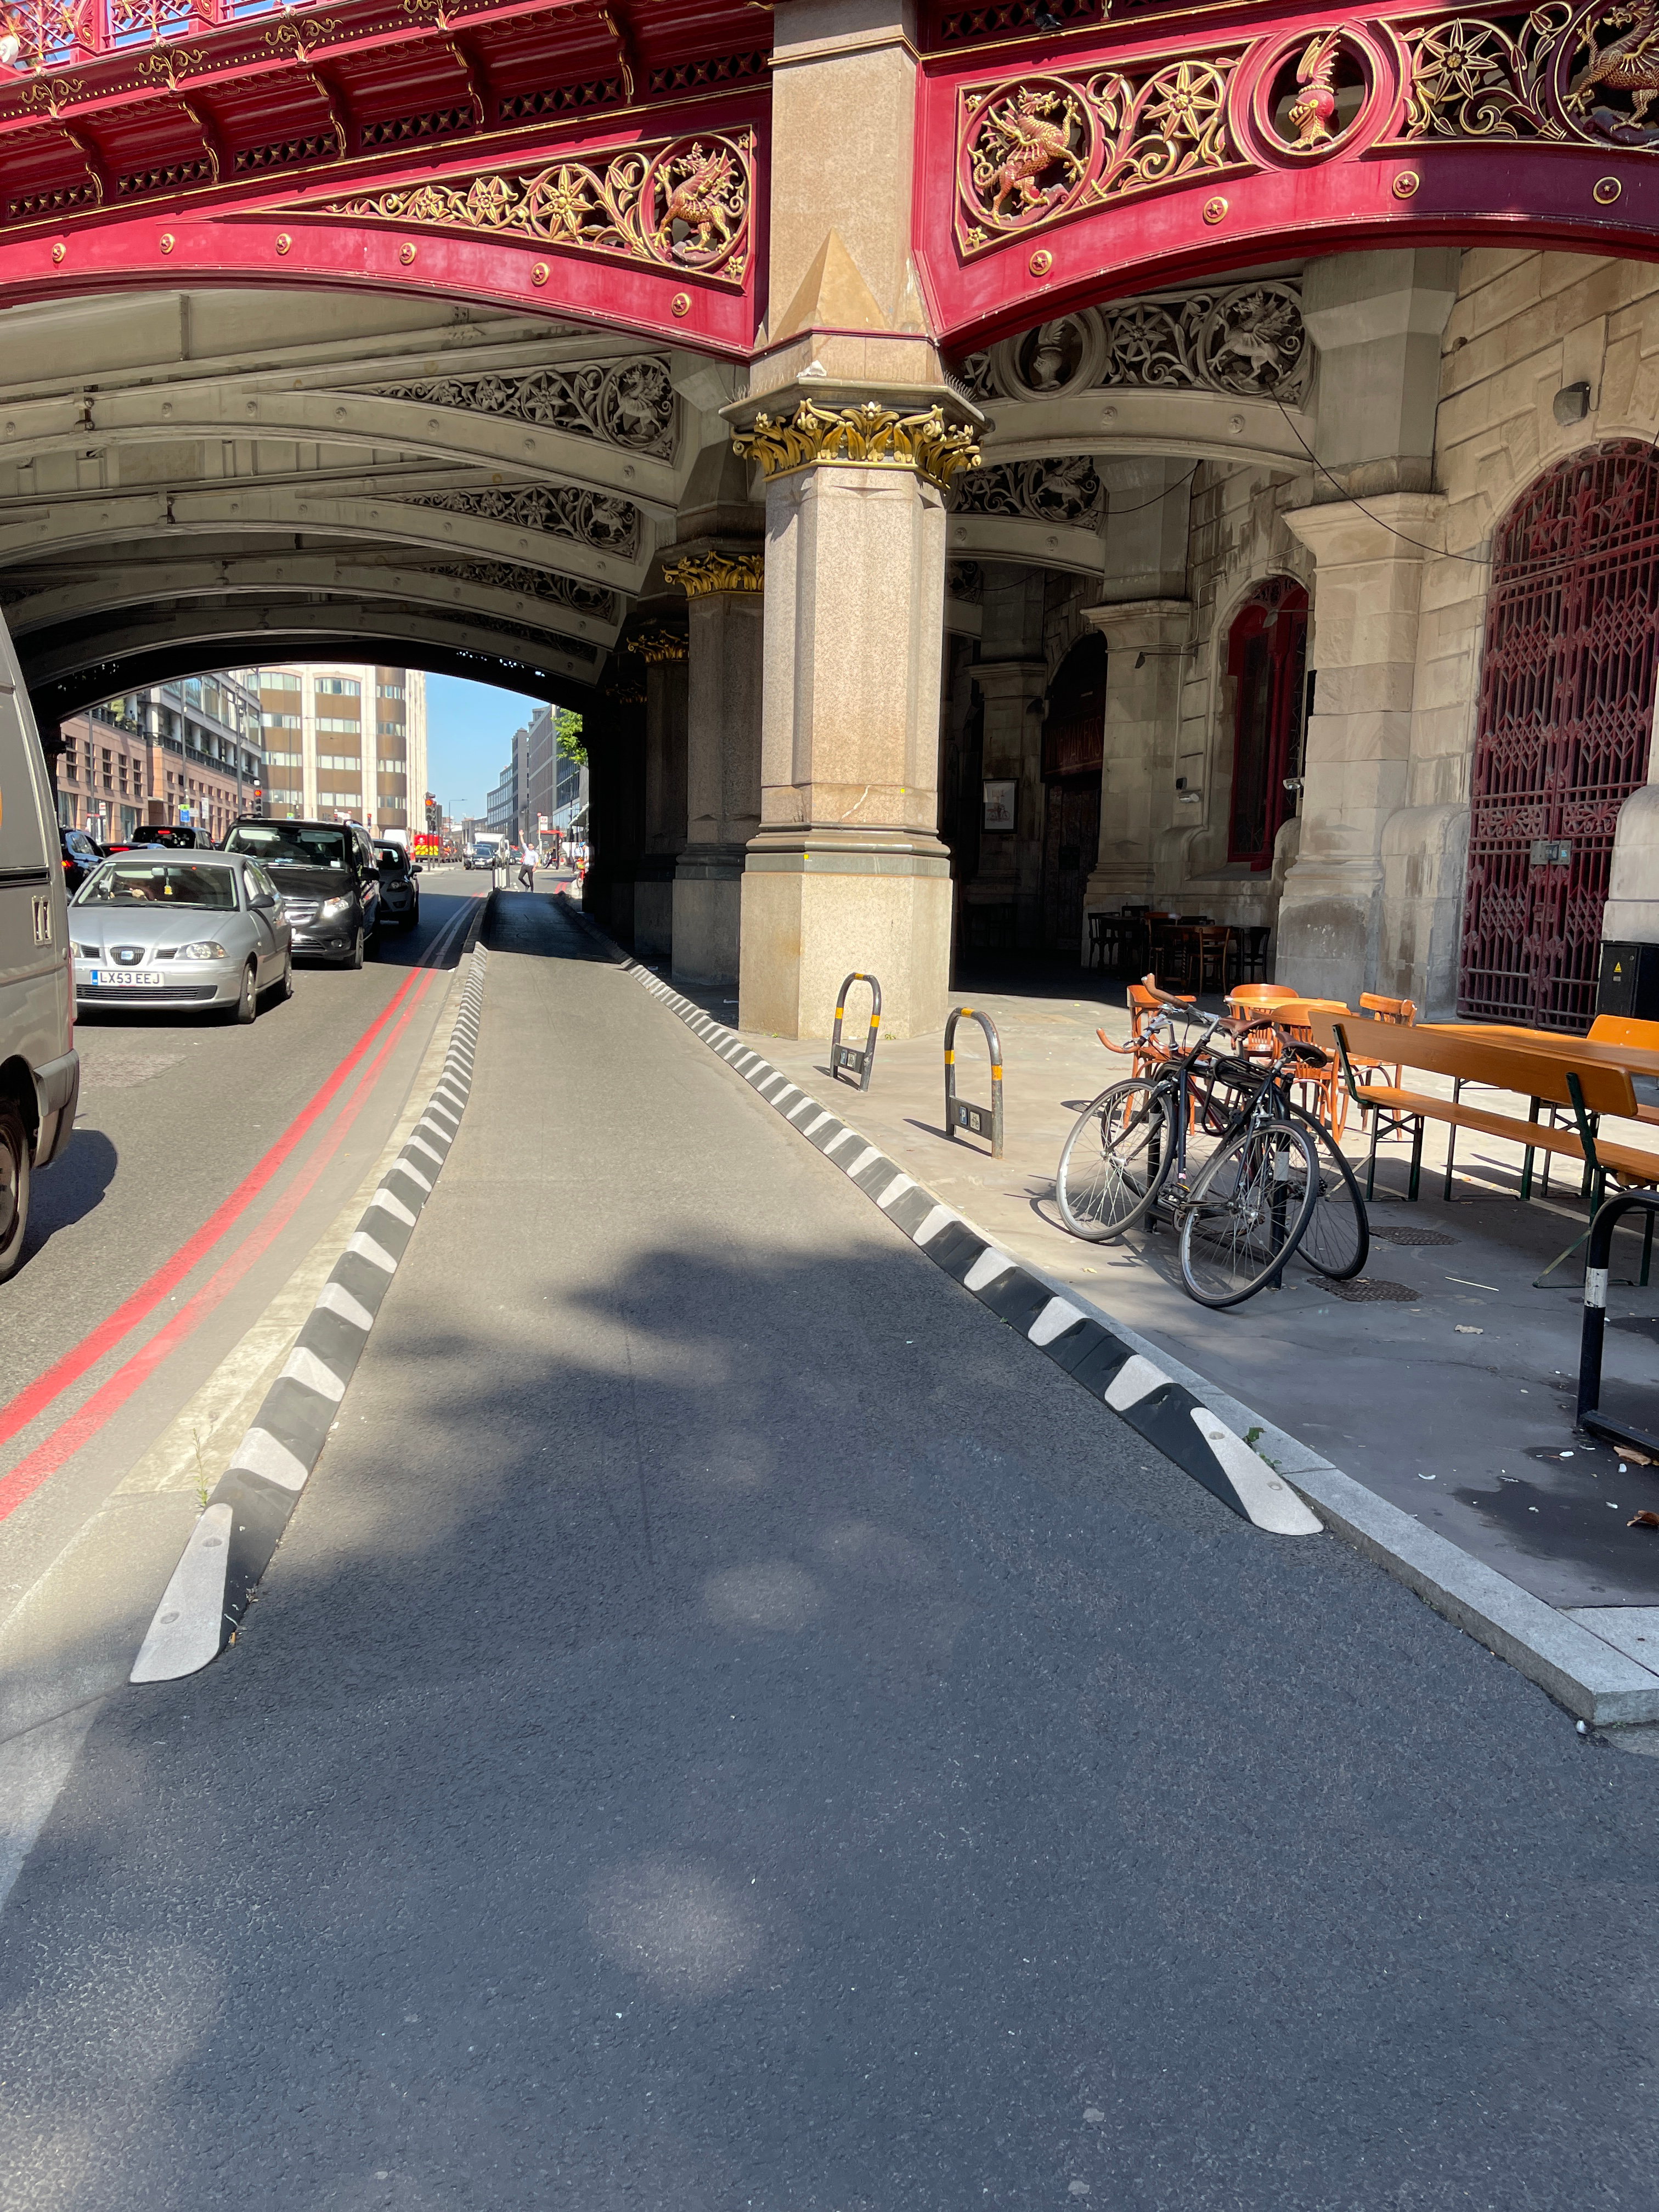 Kerb_Orca_Cycle_Lane_Products_London_Rediweld_Traffic